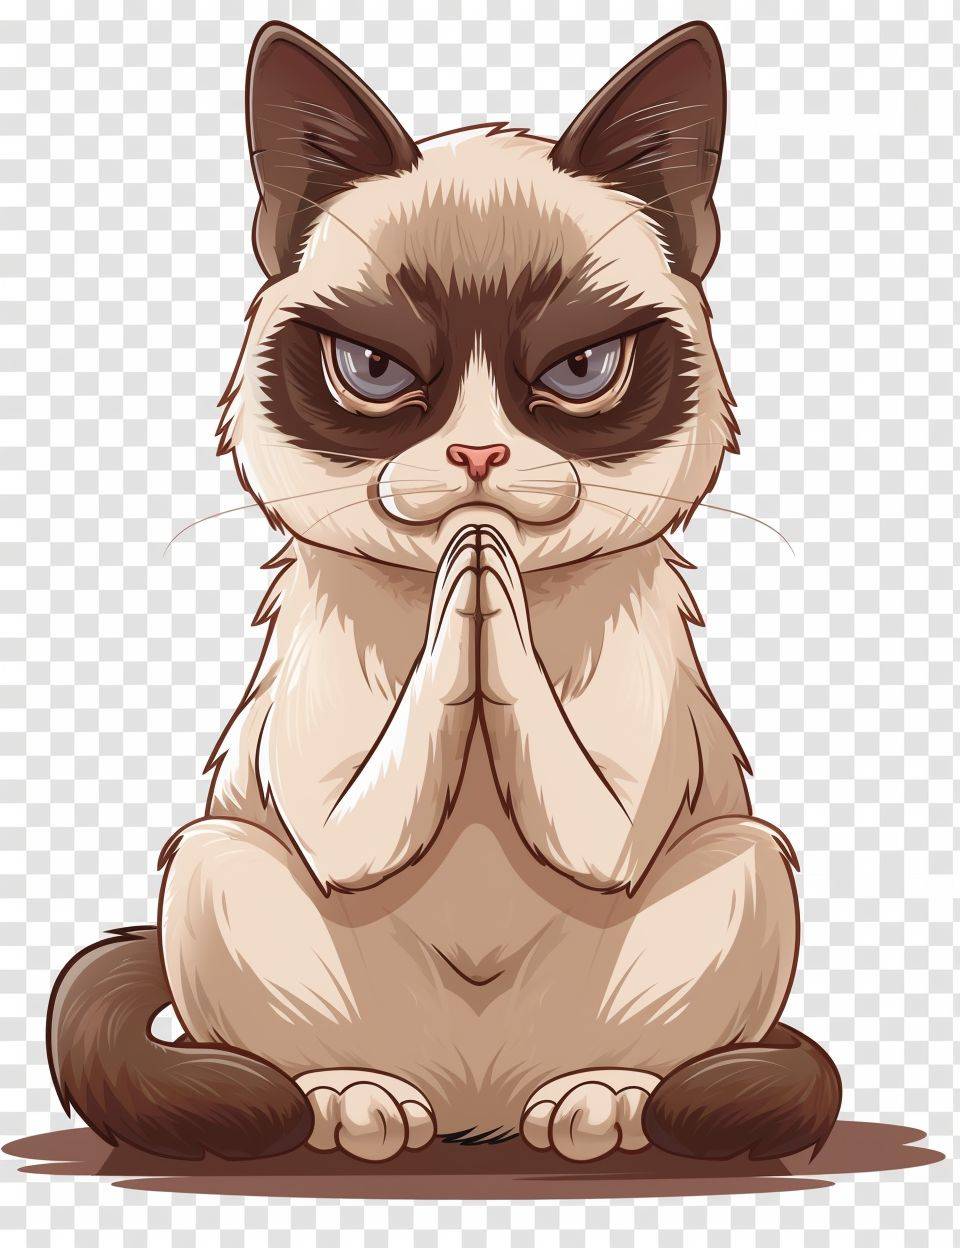 A grumpy cat with an insidious look, praying, plain transparent background, comic style